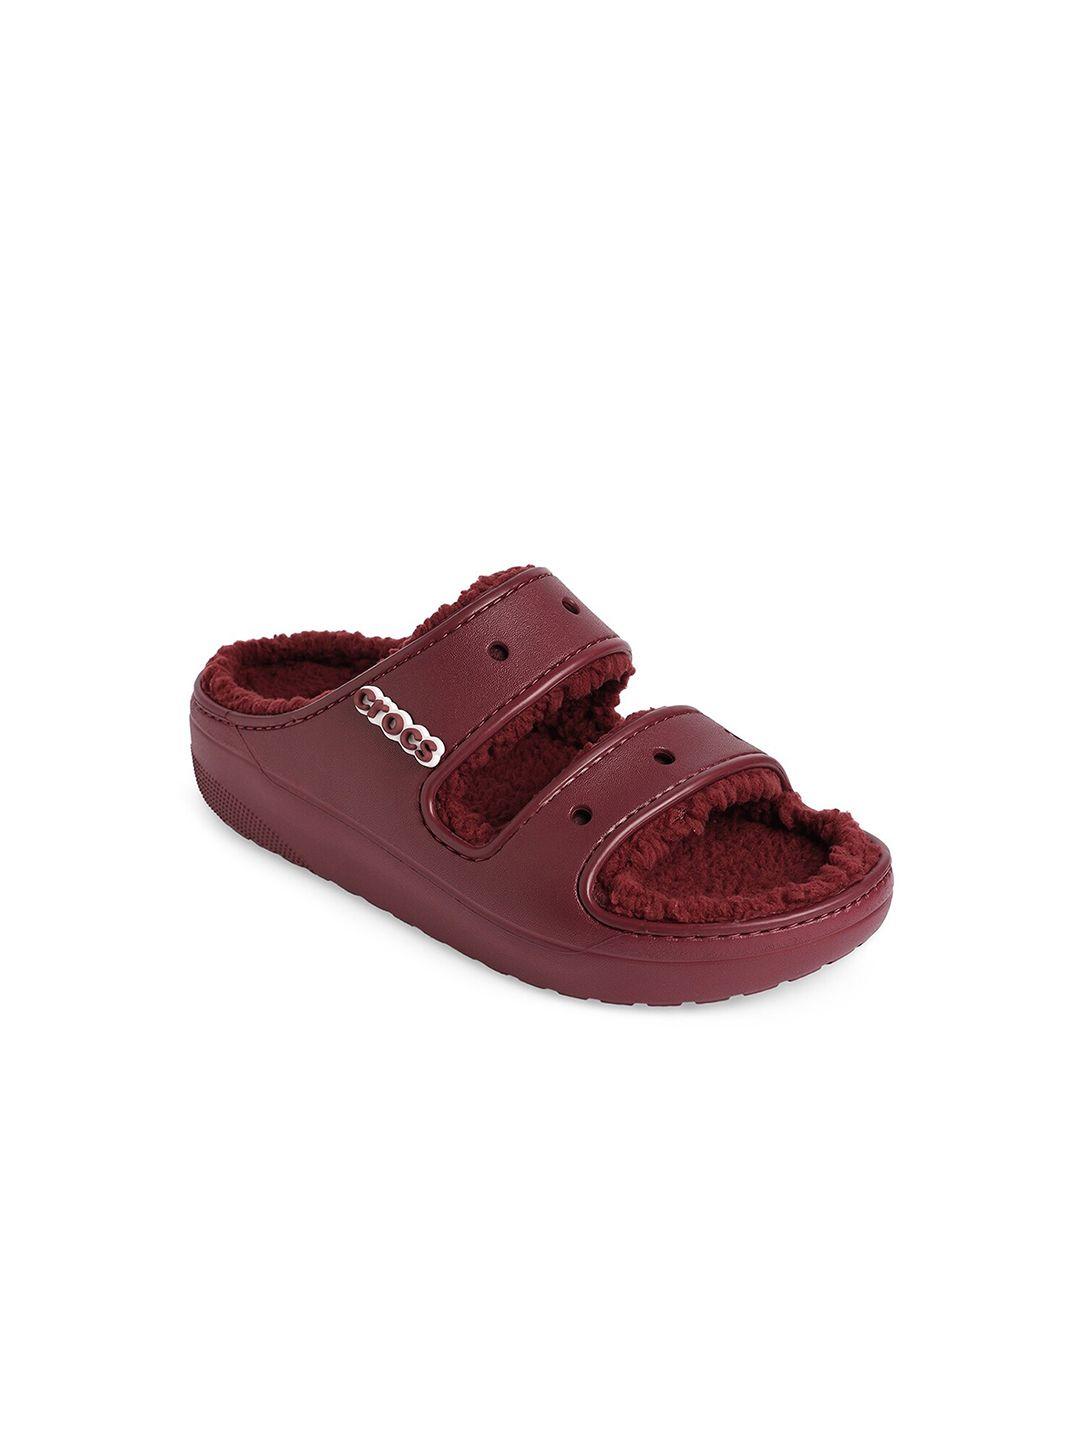 Crocs Unisex Red Comfort Sandals